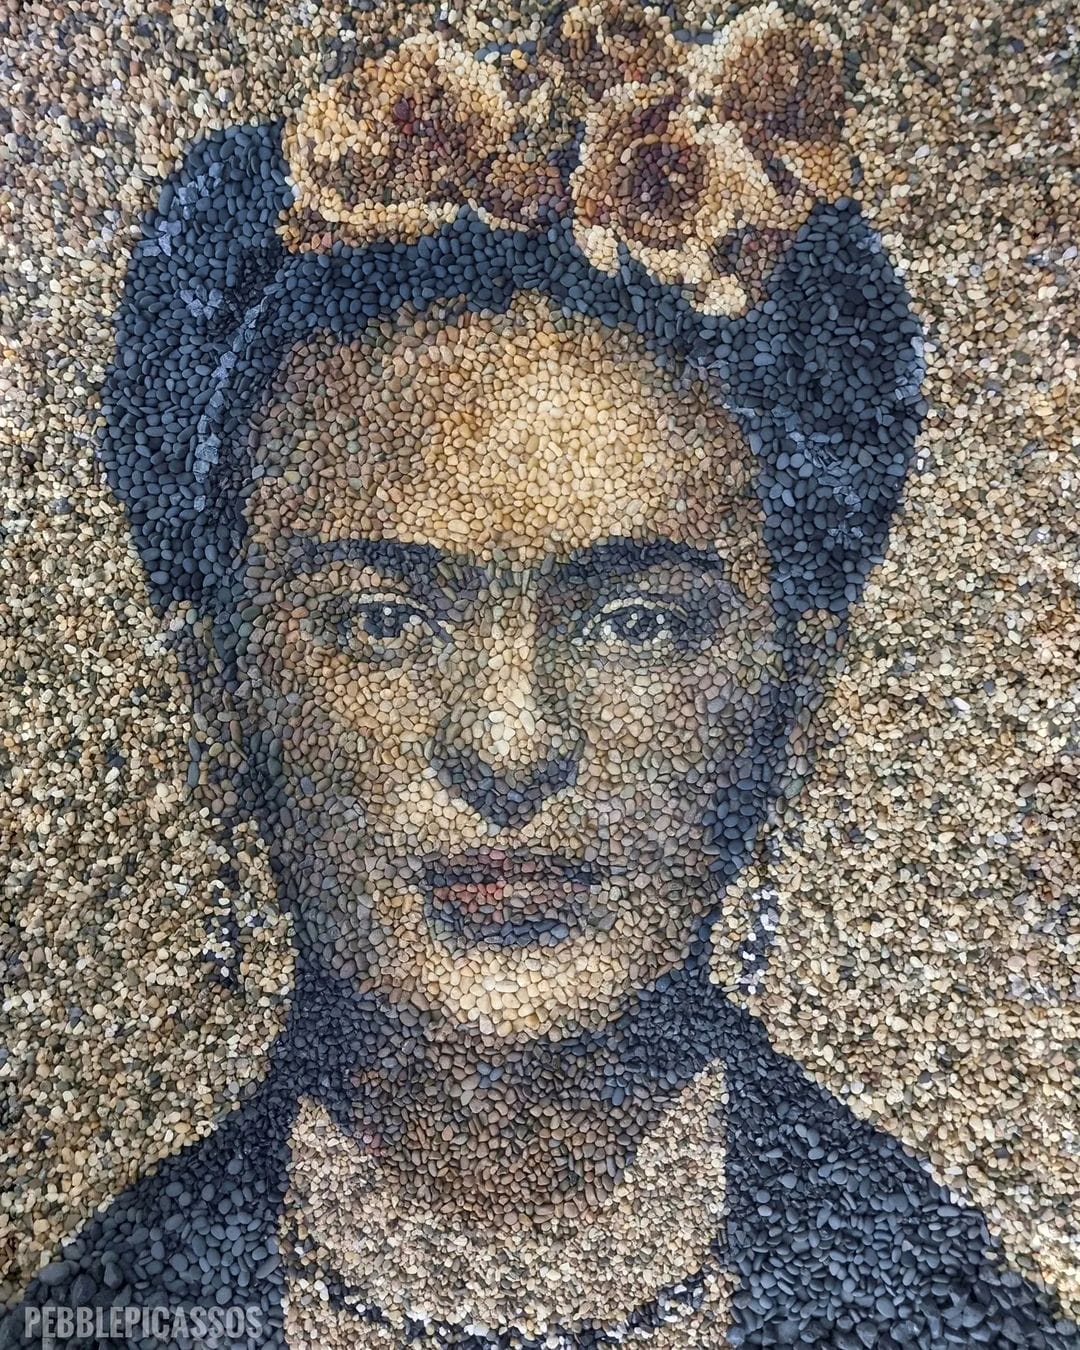 Frida Kahlo 2021 by Justin Bateman